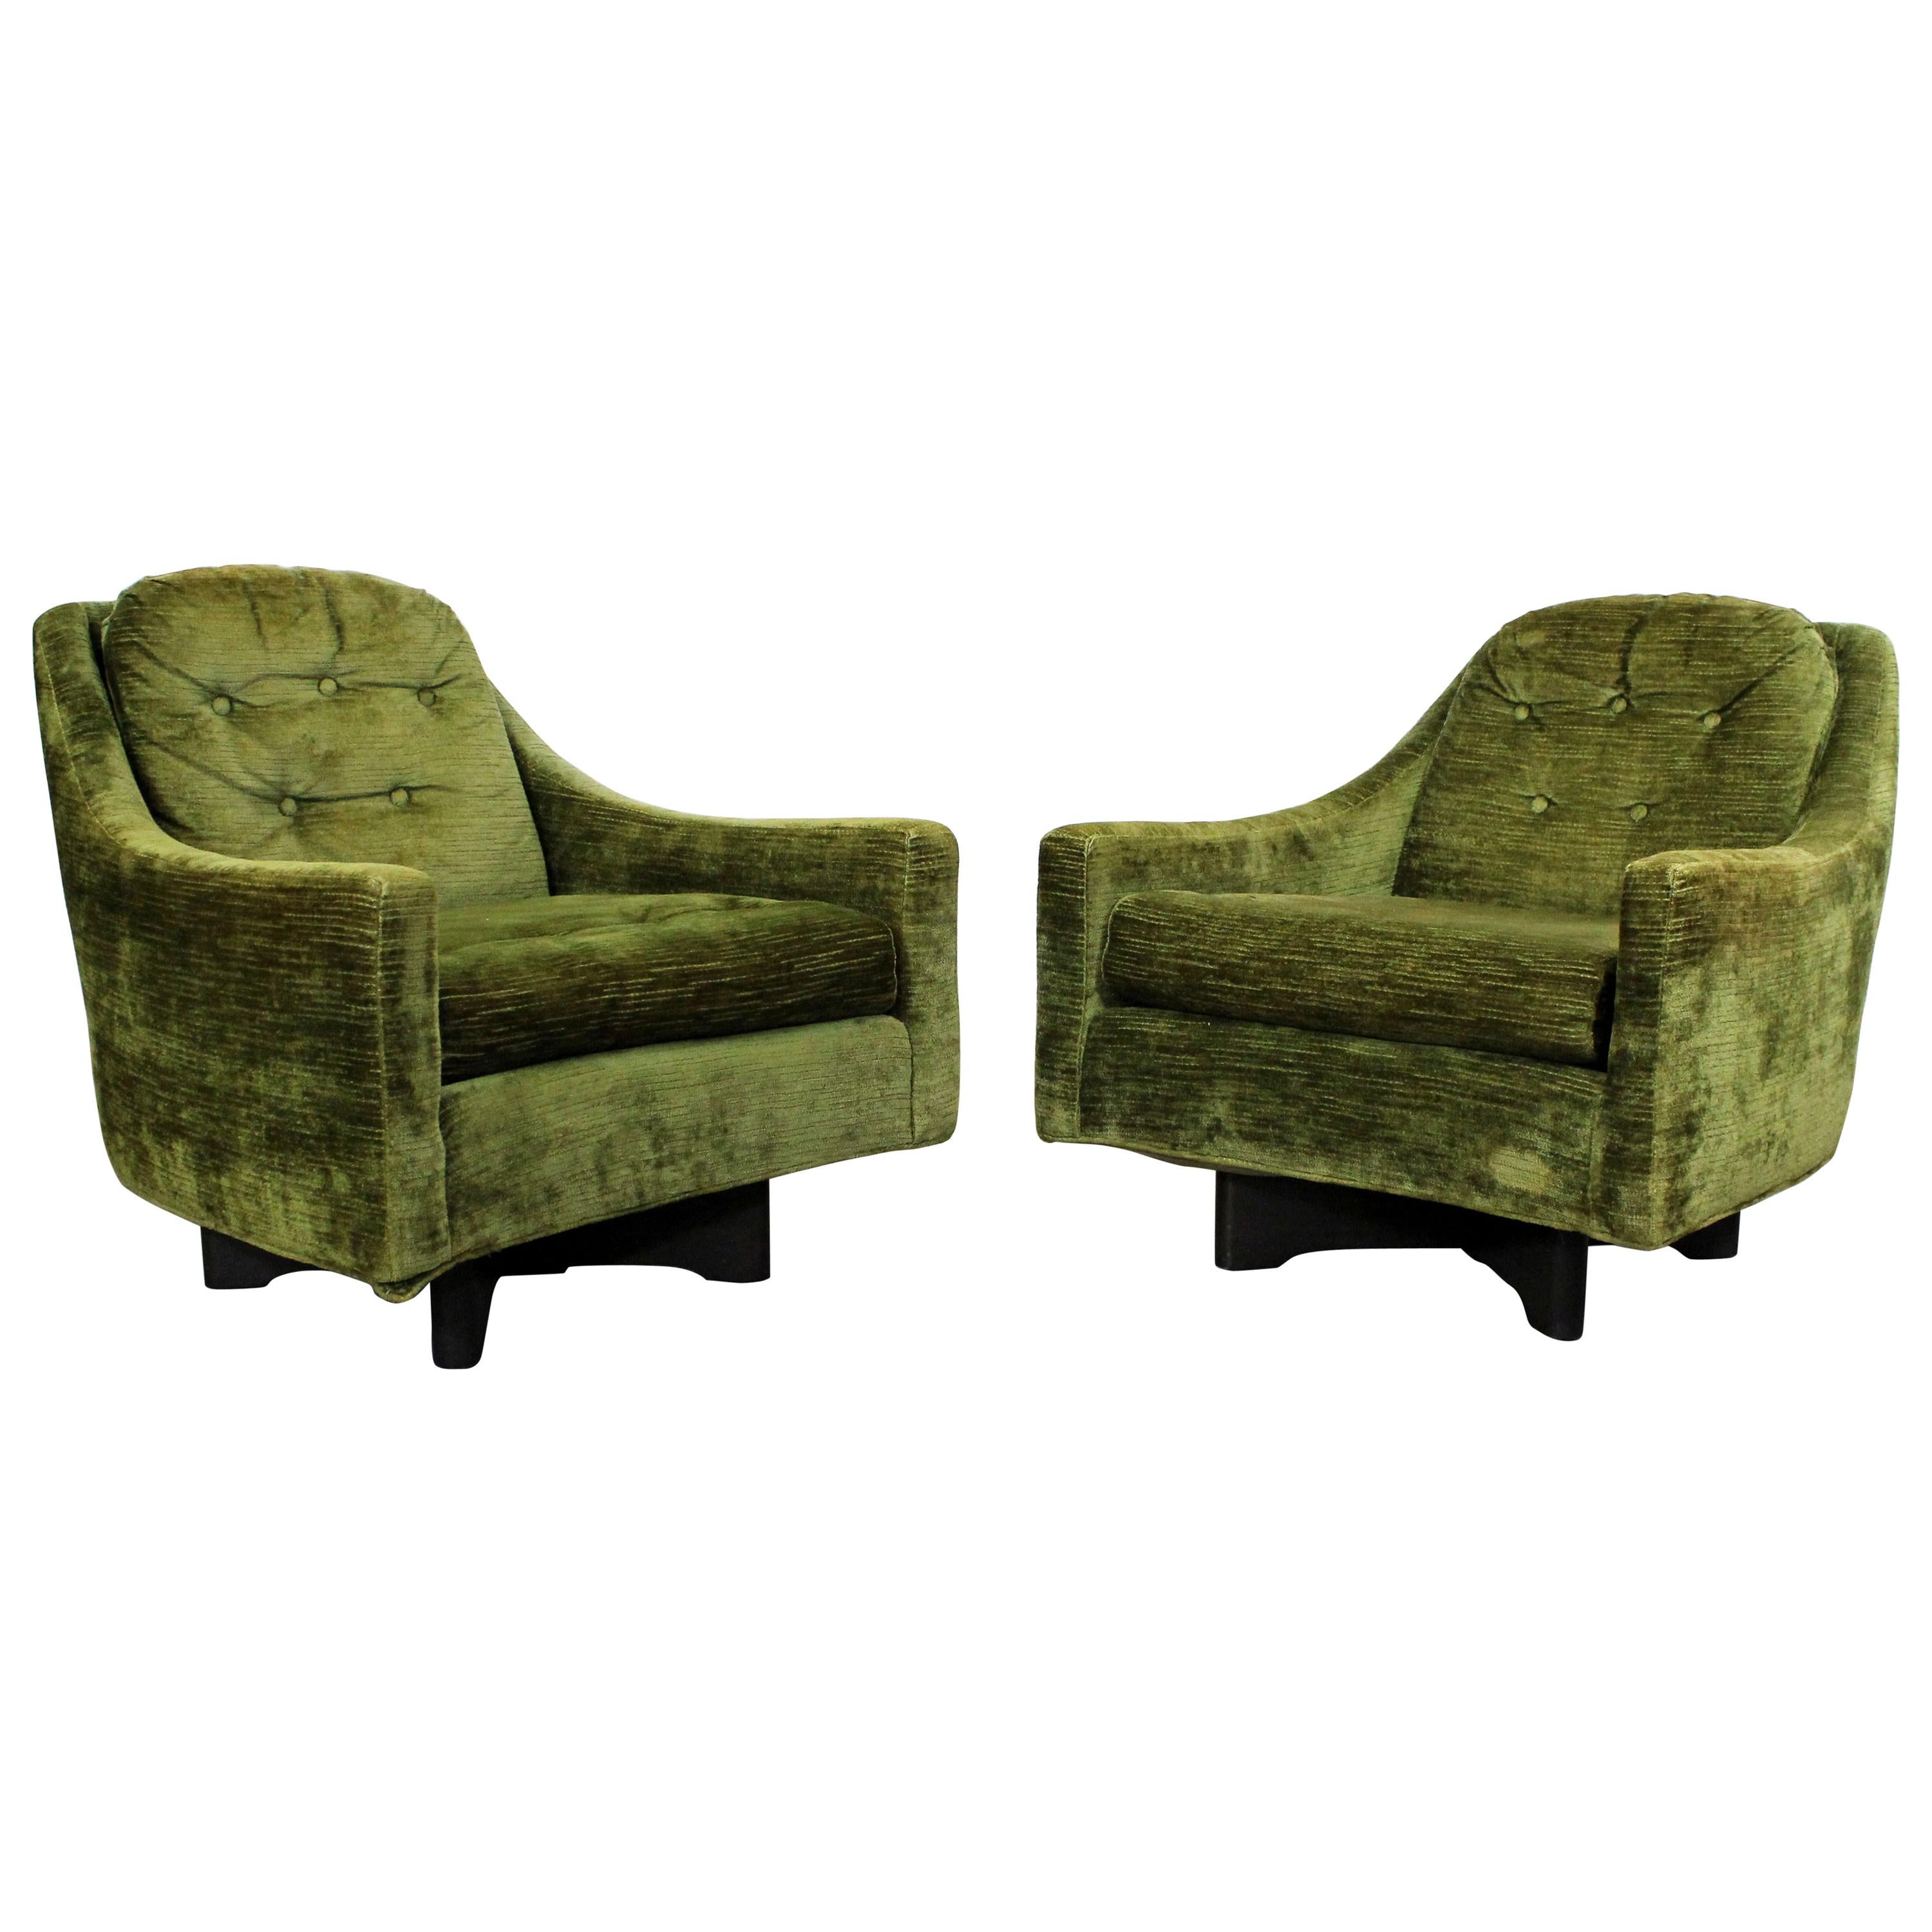 Pair of Midcentury Danish Modern Adrian Pearsall Style Swivel Club Chairs